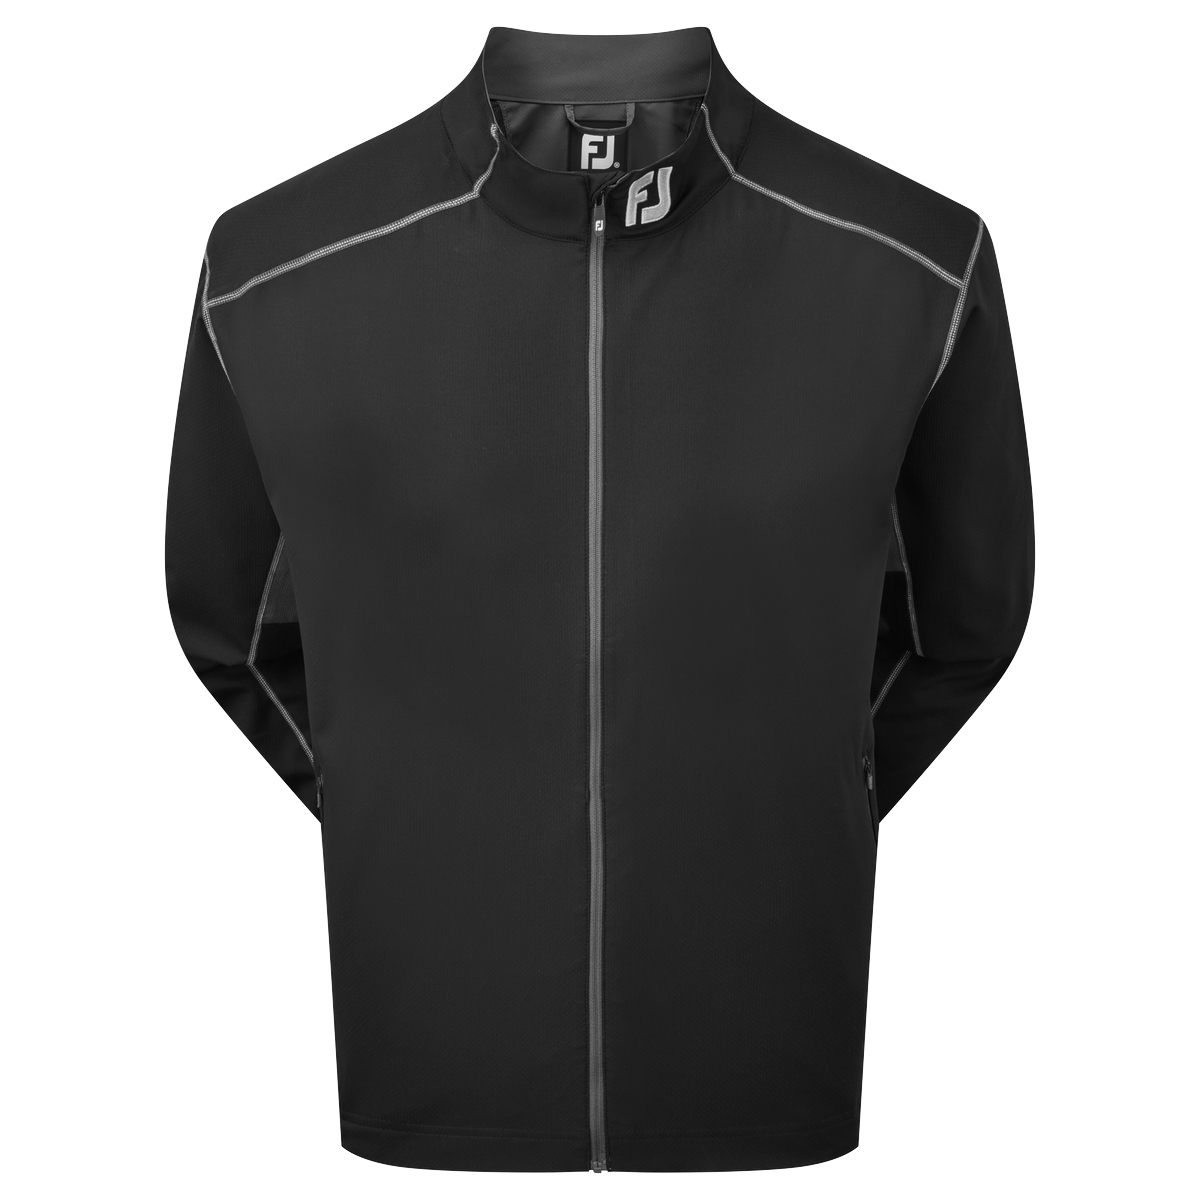 FootJoy EU FJ Full Zip Wind Shirt Jacket  - Black/Charcoal